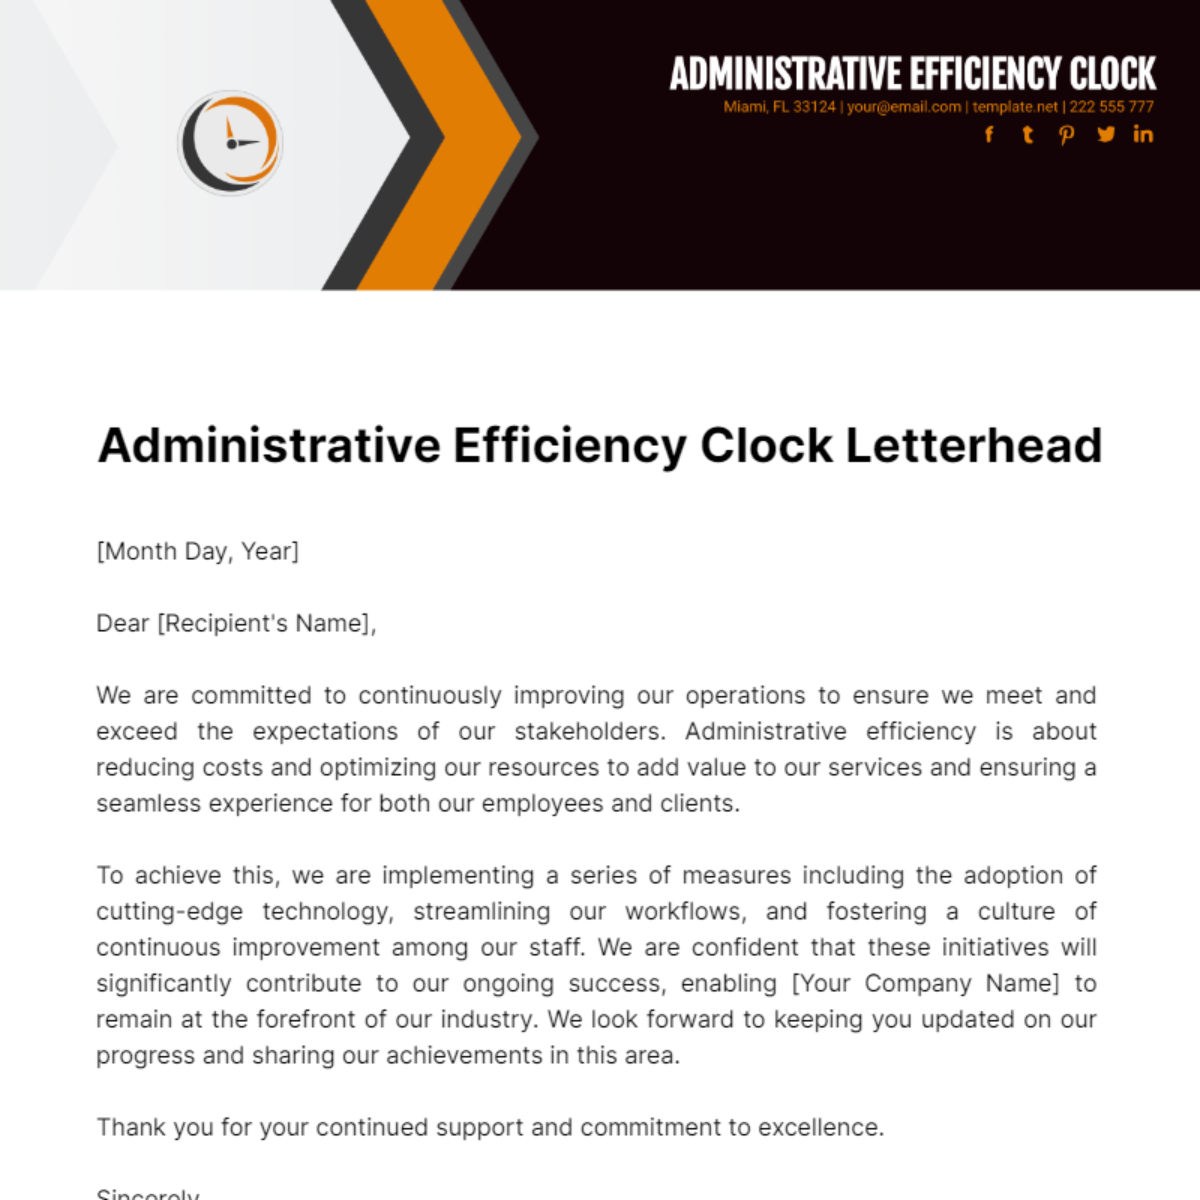 Administrative Efficiency Clock Letterhead Template